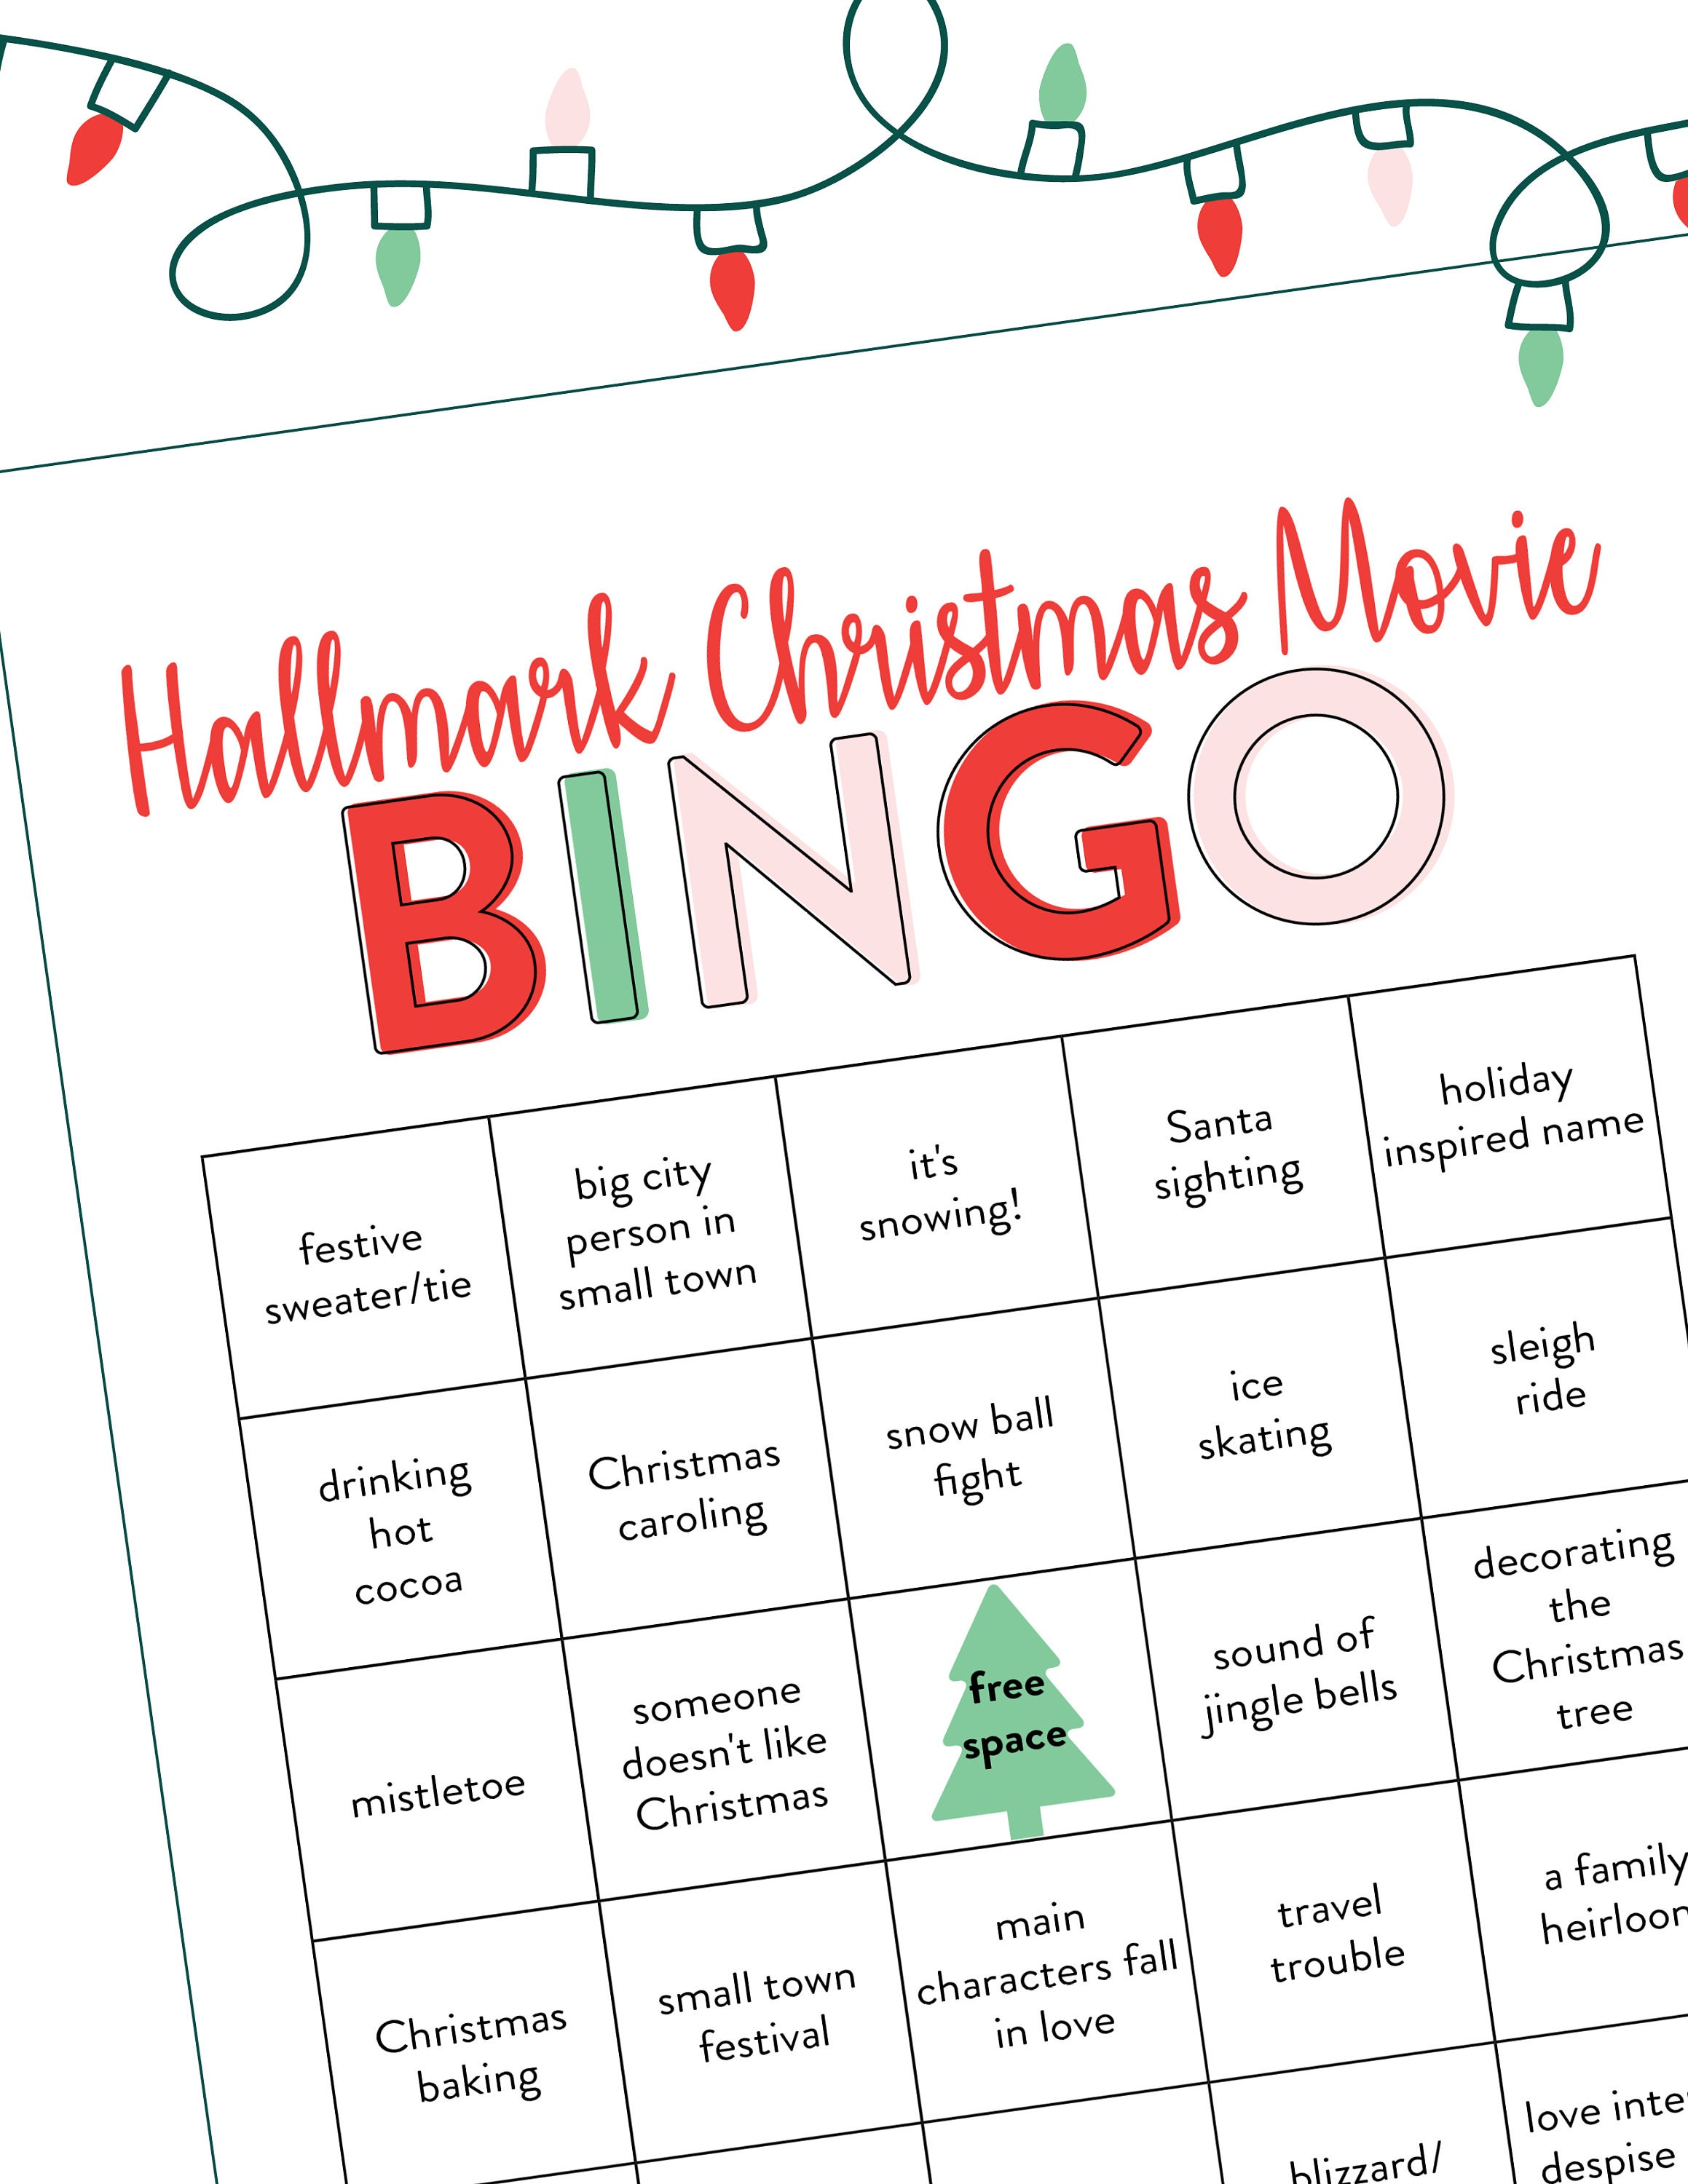 hallmark-christmas-movie-christmas-bingo-hallmark-bingo-etsy